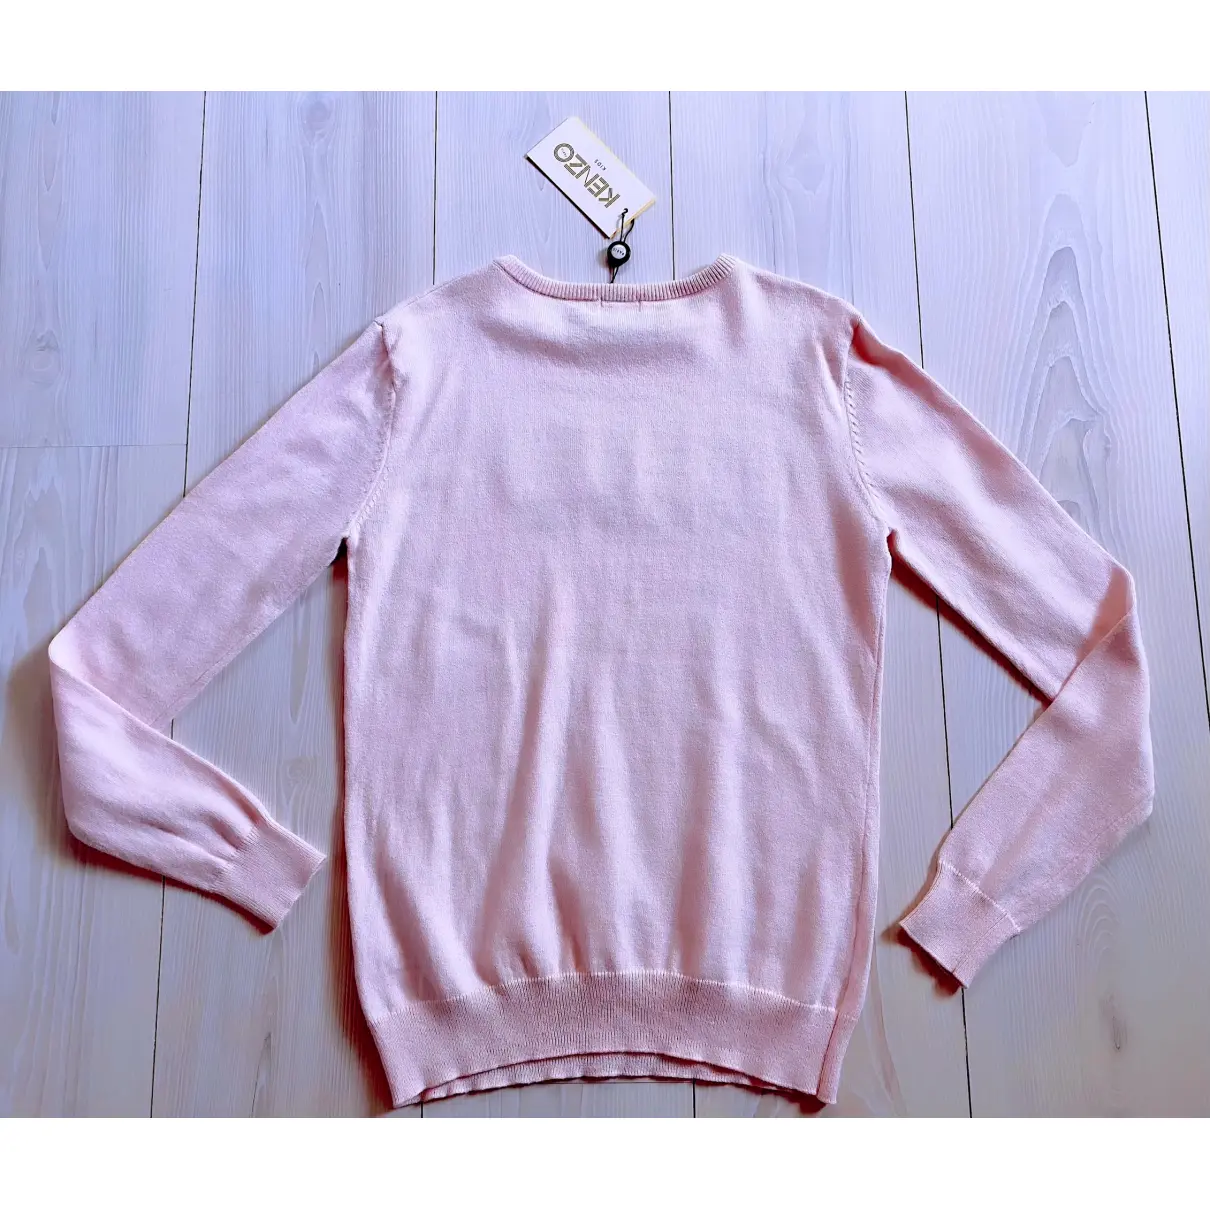 Buy Kenzo Sweater online